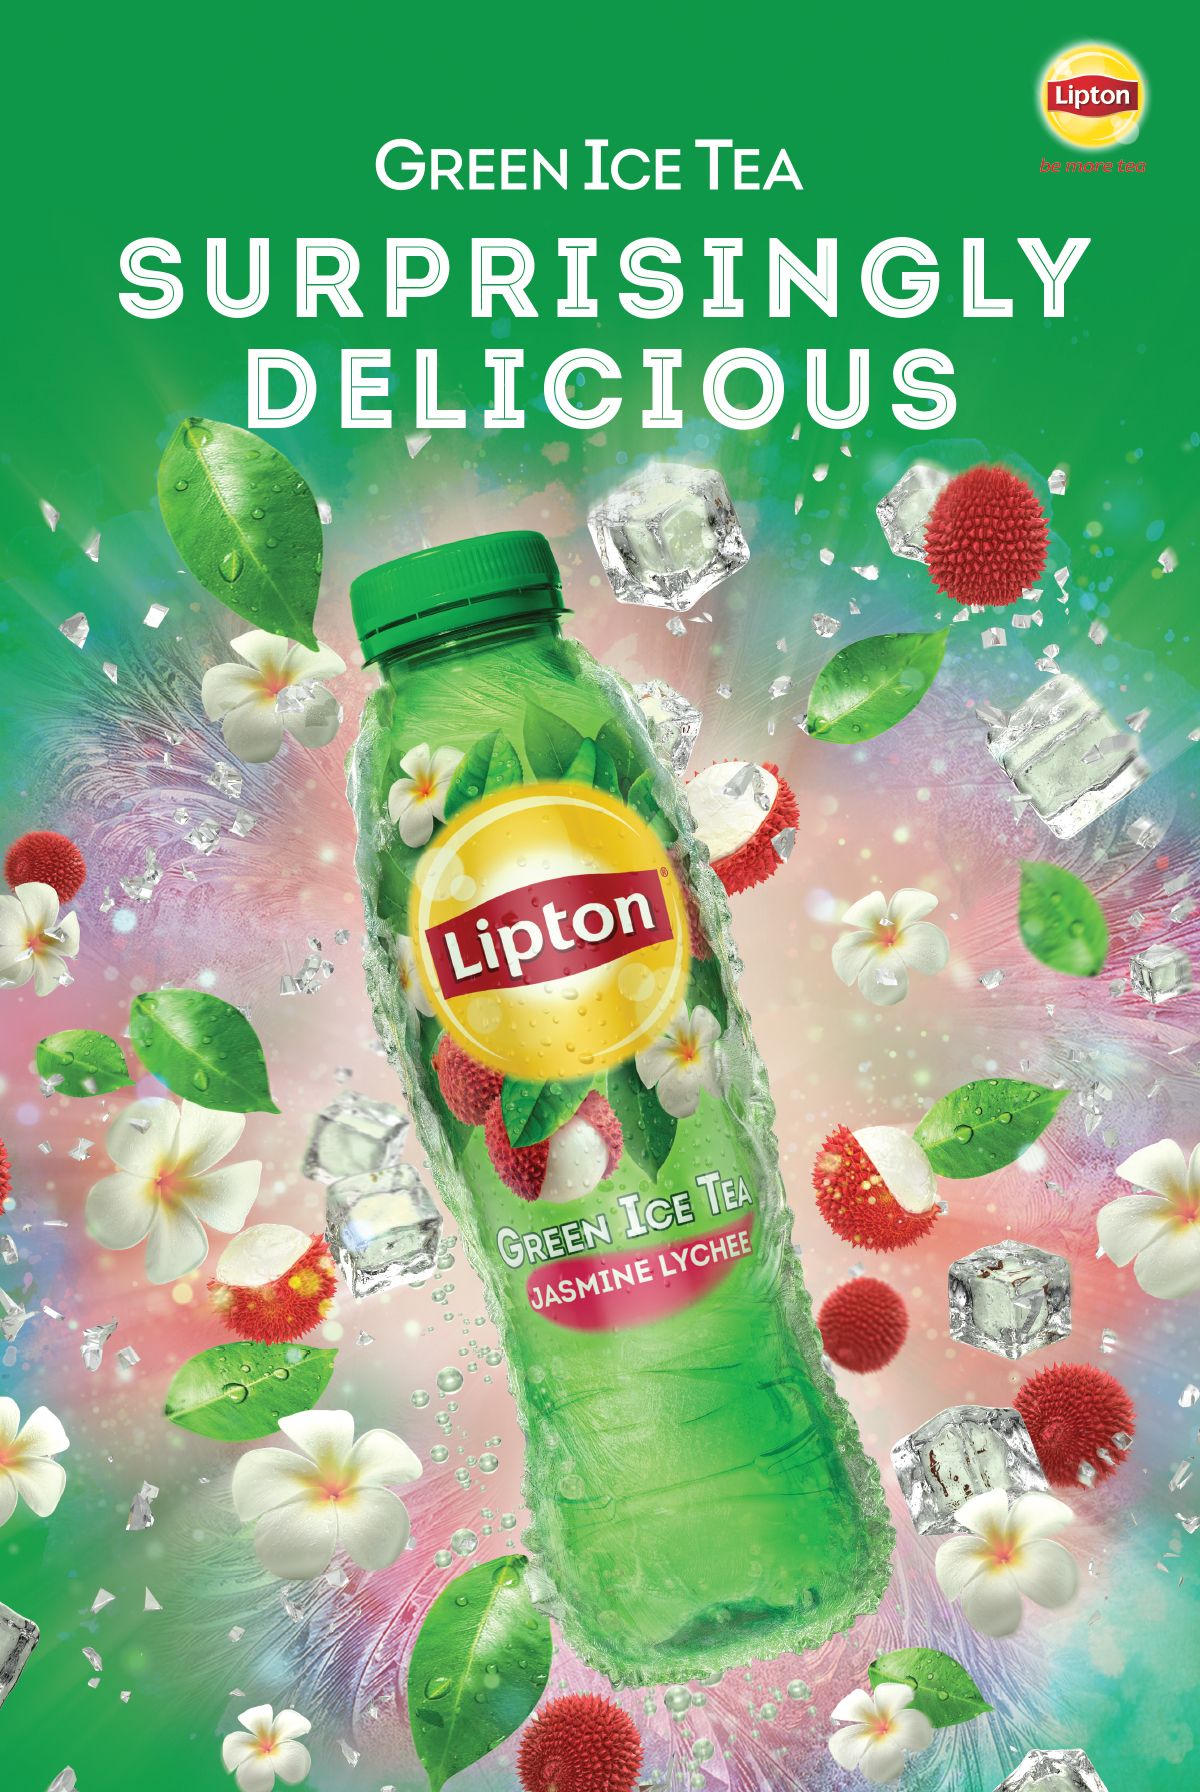 Lipton tea green tea bose collins 3ddigital DigitalIllustration creative campaigns